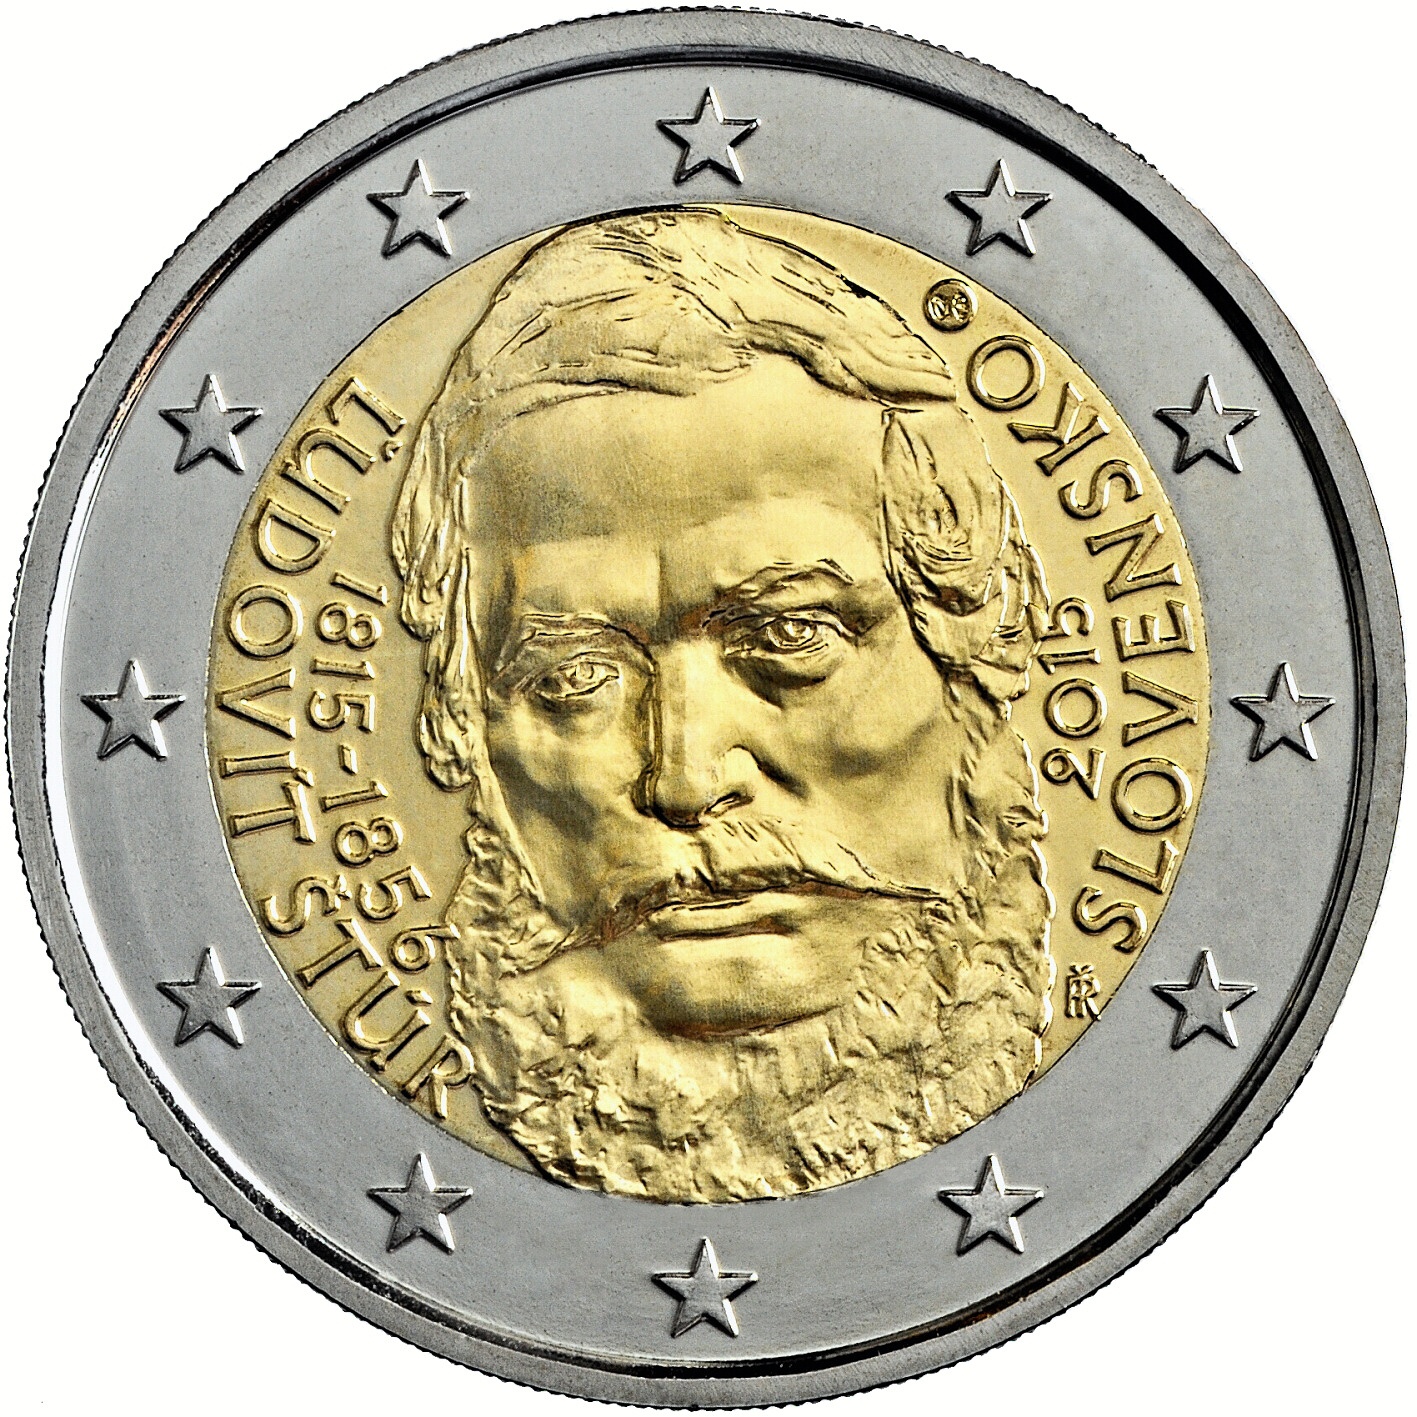 Banknotes and coins, 200th anniversary of the birth of Ľudovít Štúr